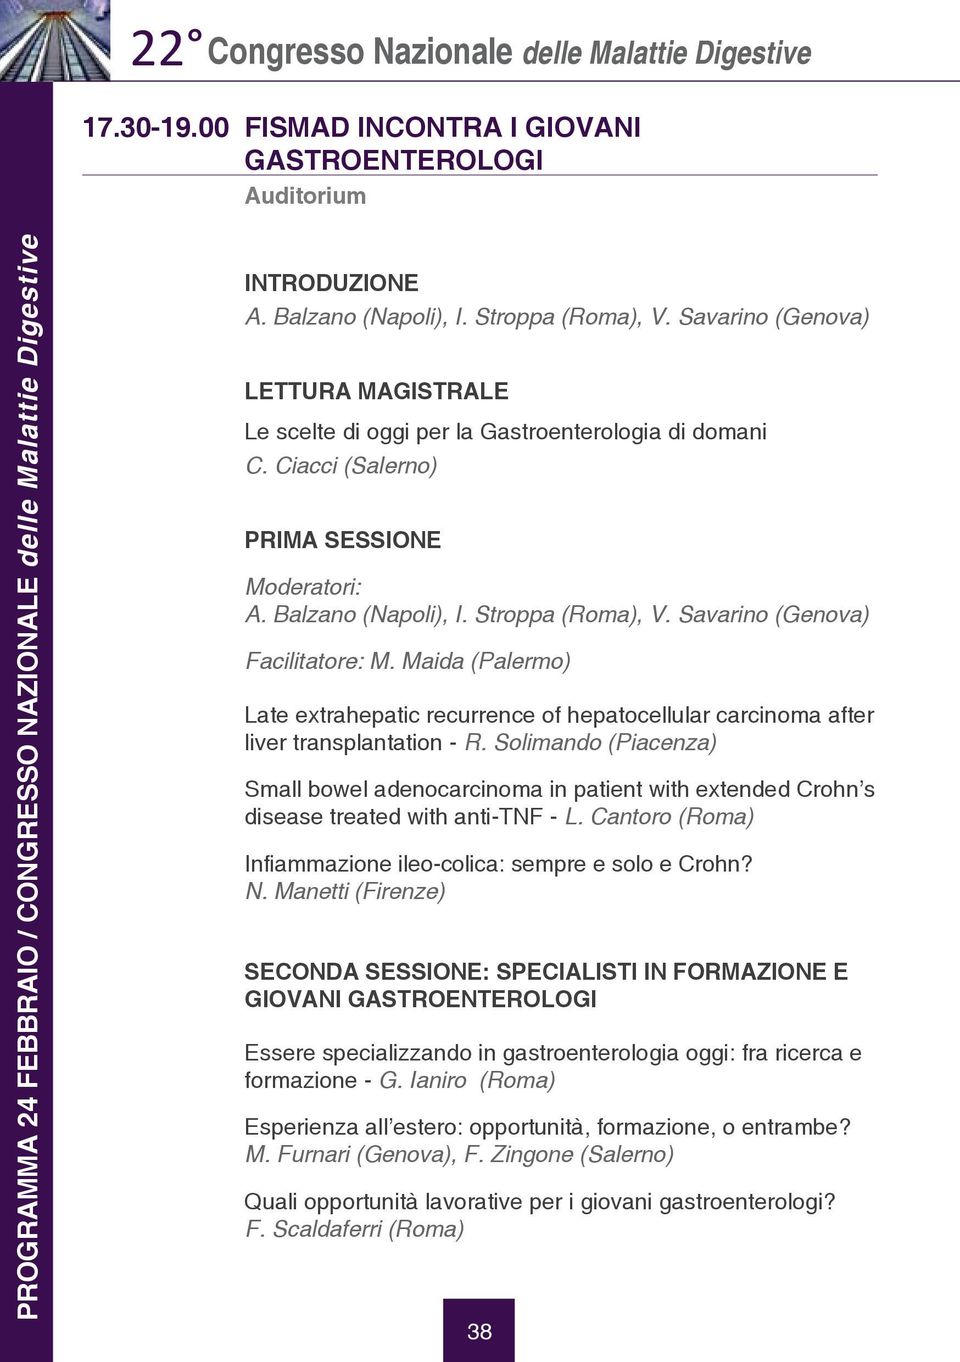 Stroppa (Roma), V. Savarino (Genova) Facilitatore: M. Maida (Palermo) Late extrahepatic recurrence of hepatocellular carcinoma after liver transplantation - R.